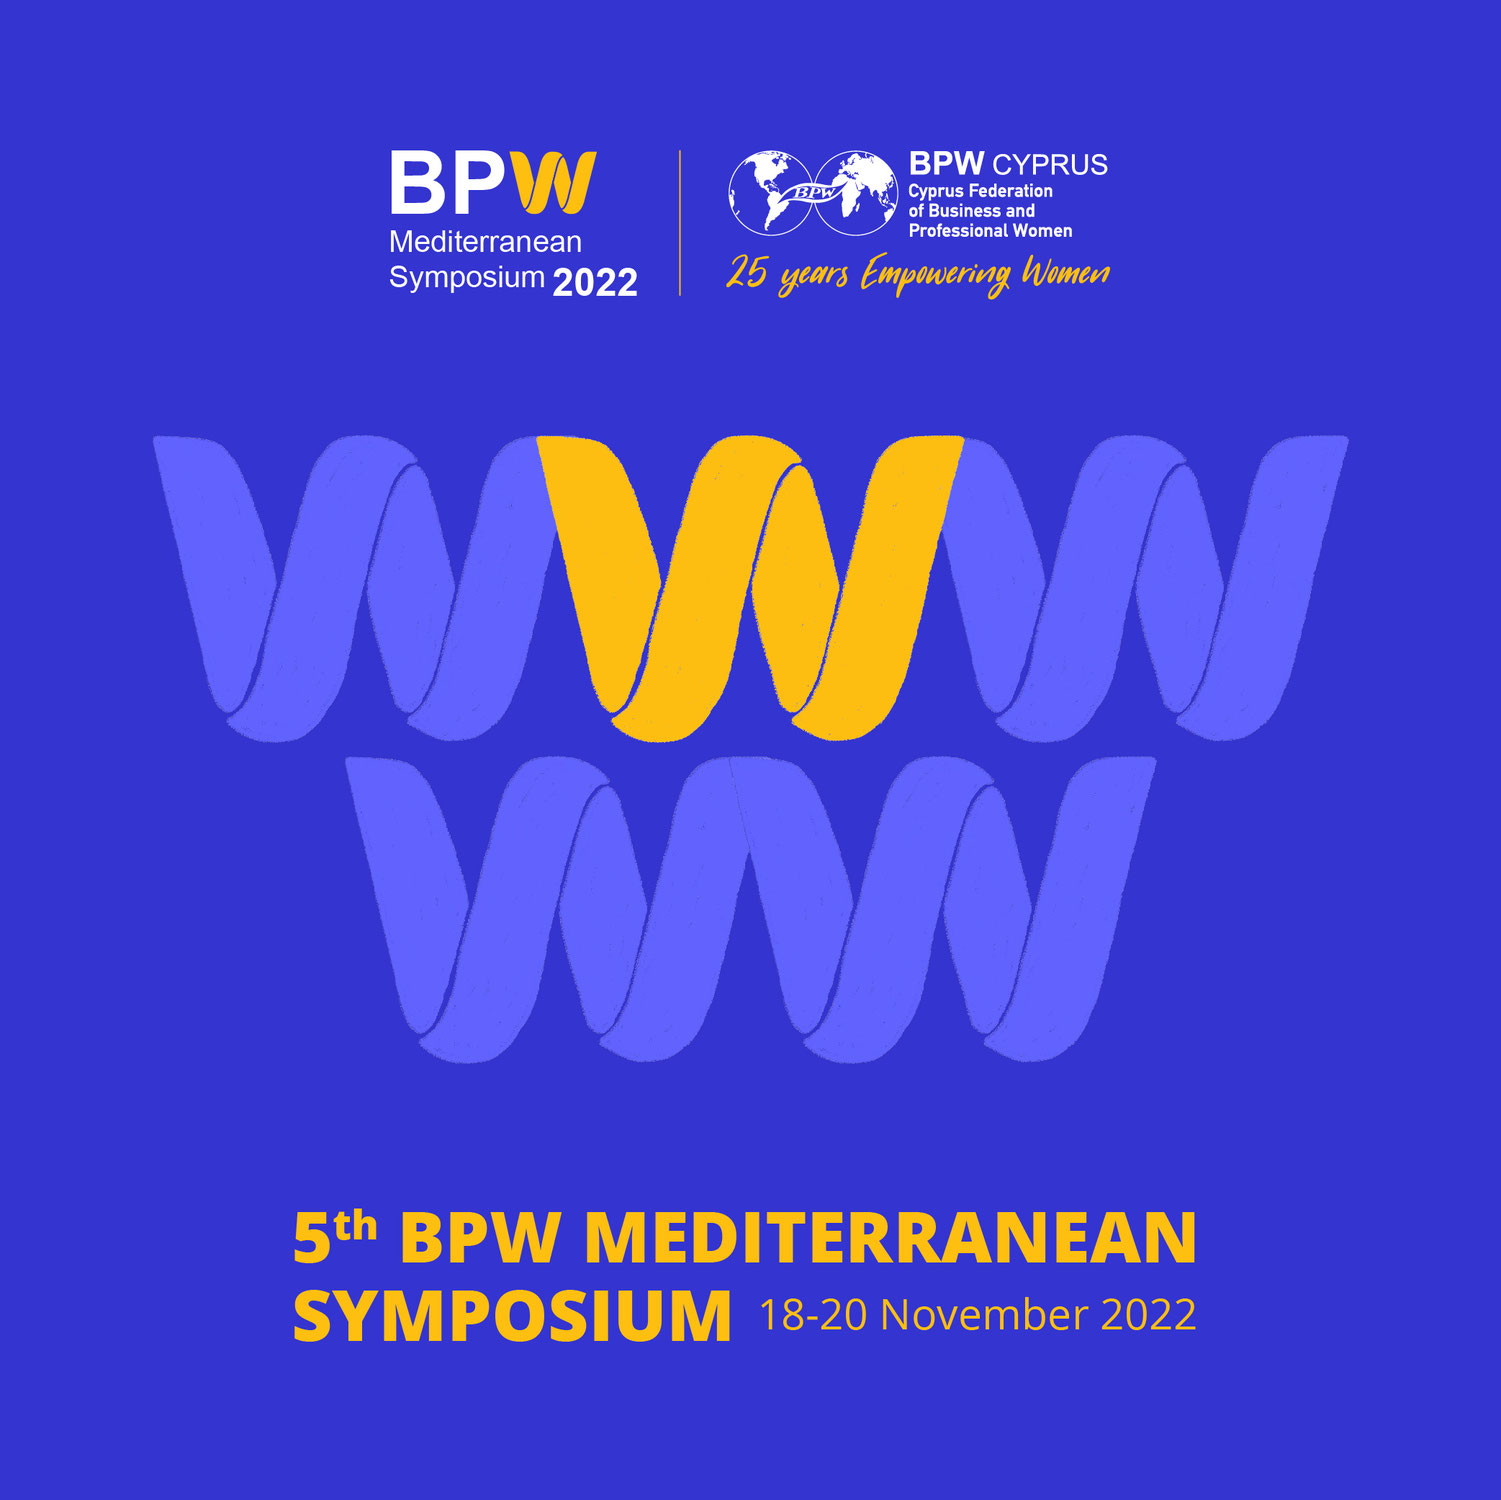 5th BPW Mediterranean Symposium in Nicosia, Cyprus - Update